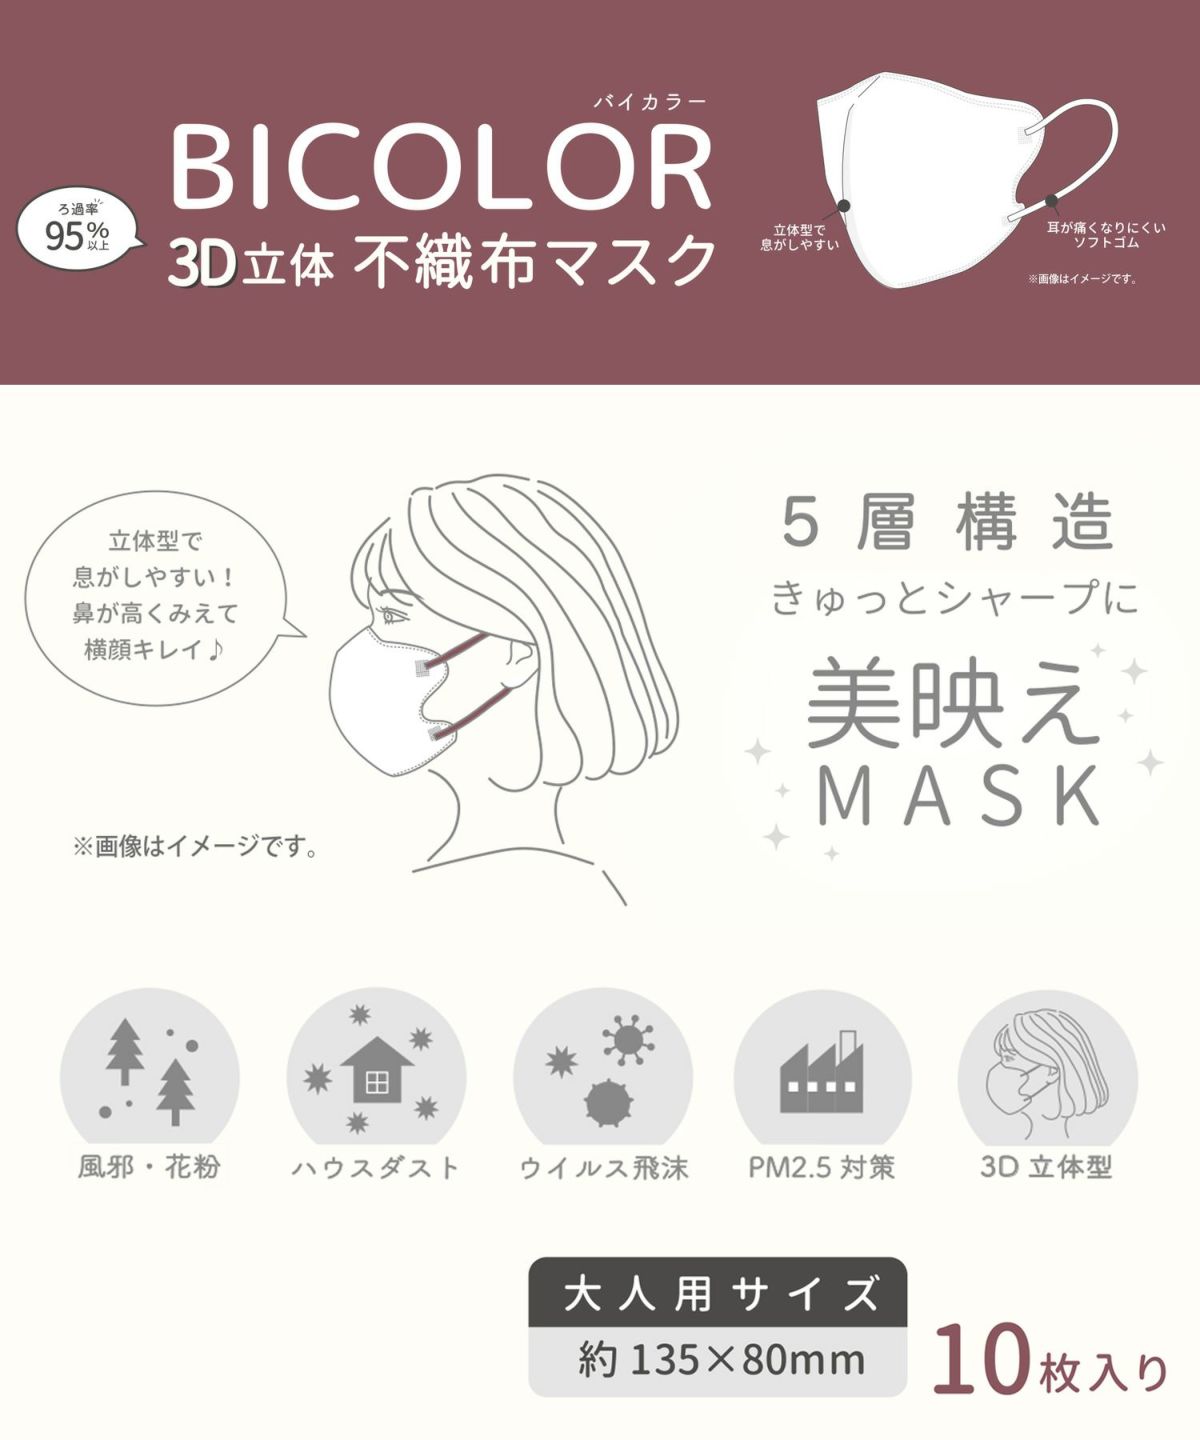 BICOLOR 3D立体不織布マスク